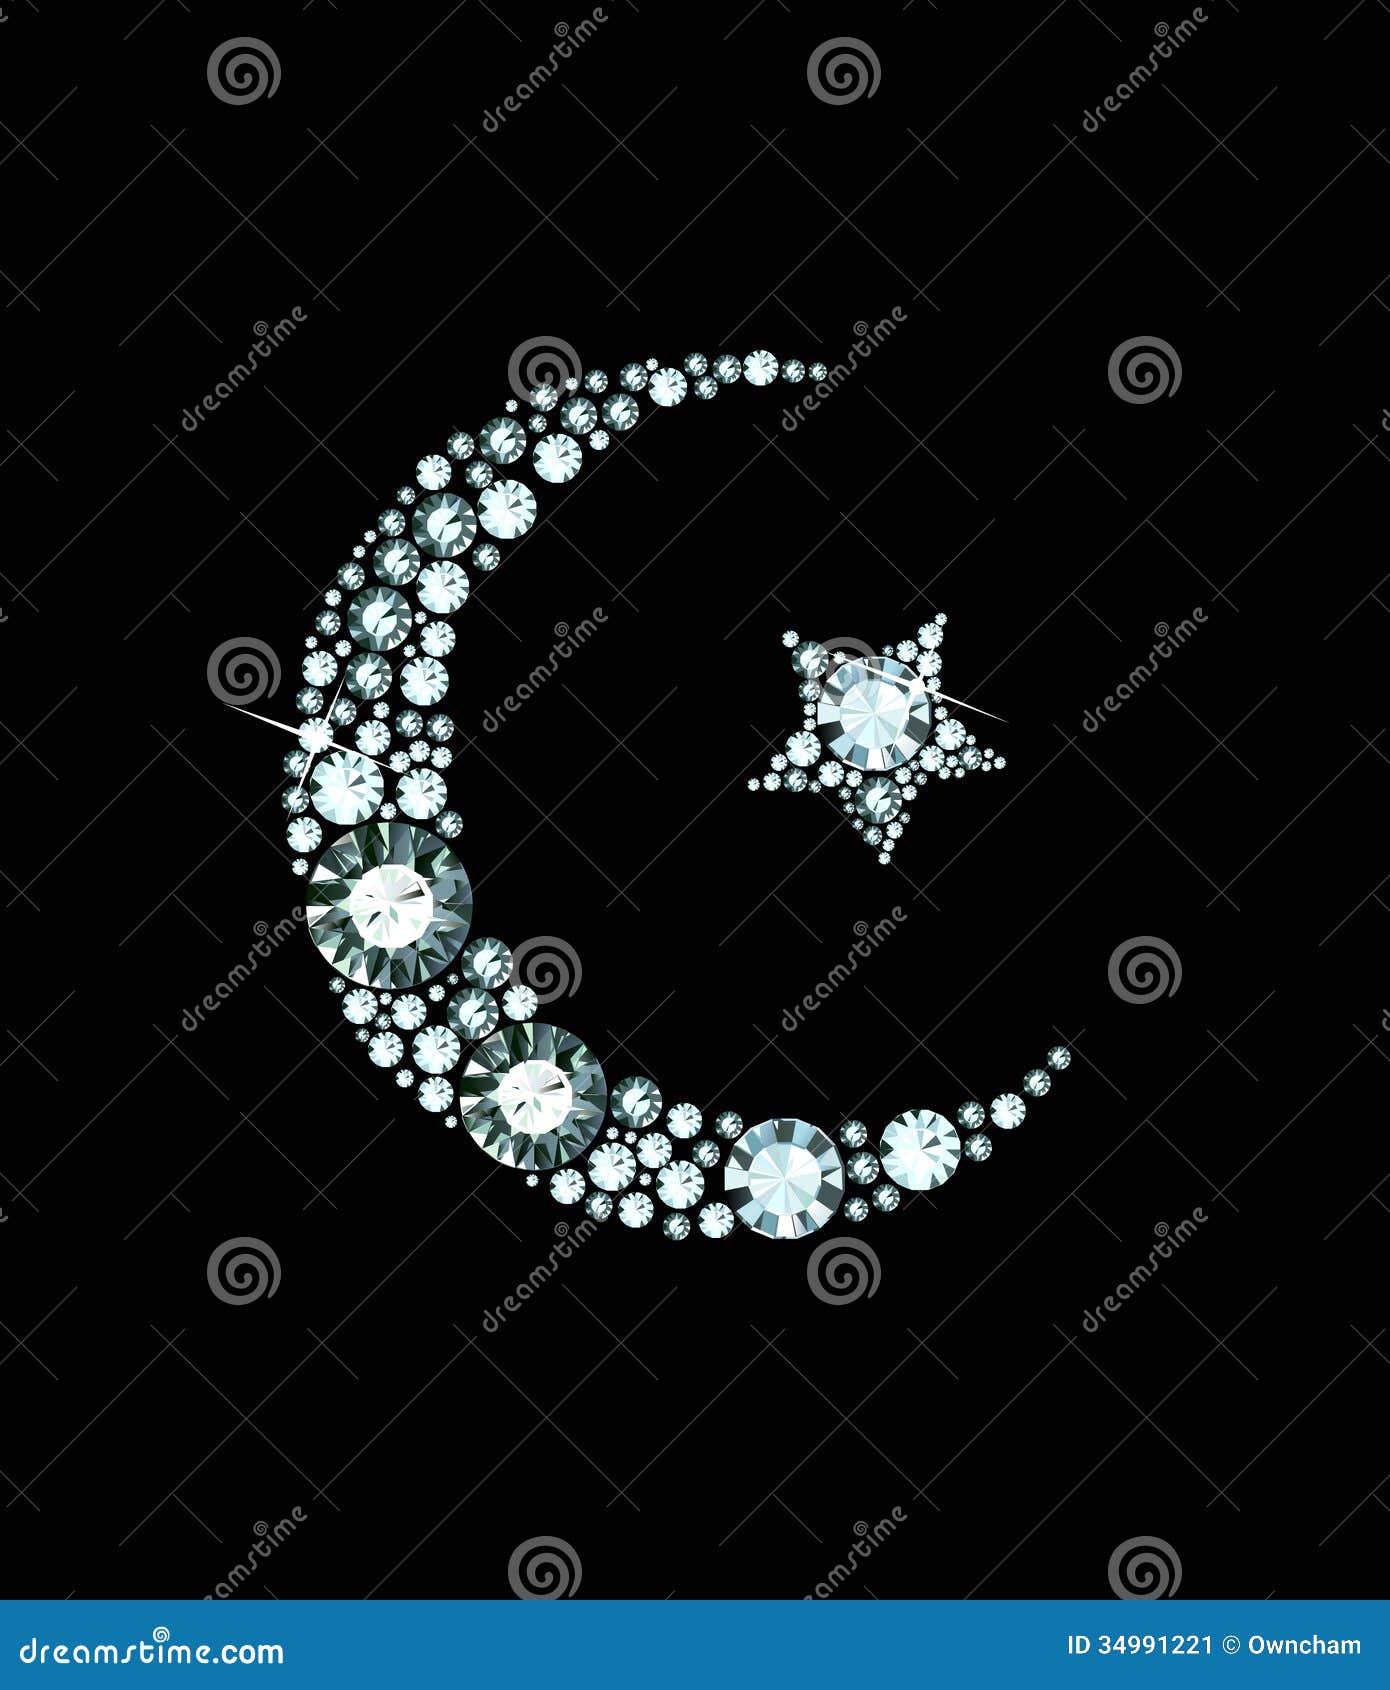 Diamond Islam Symbol Stock Image - Image: 34991221